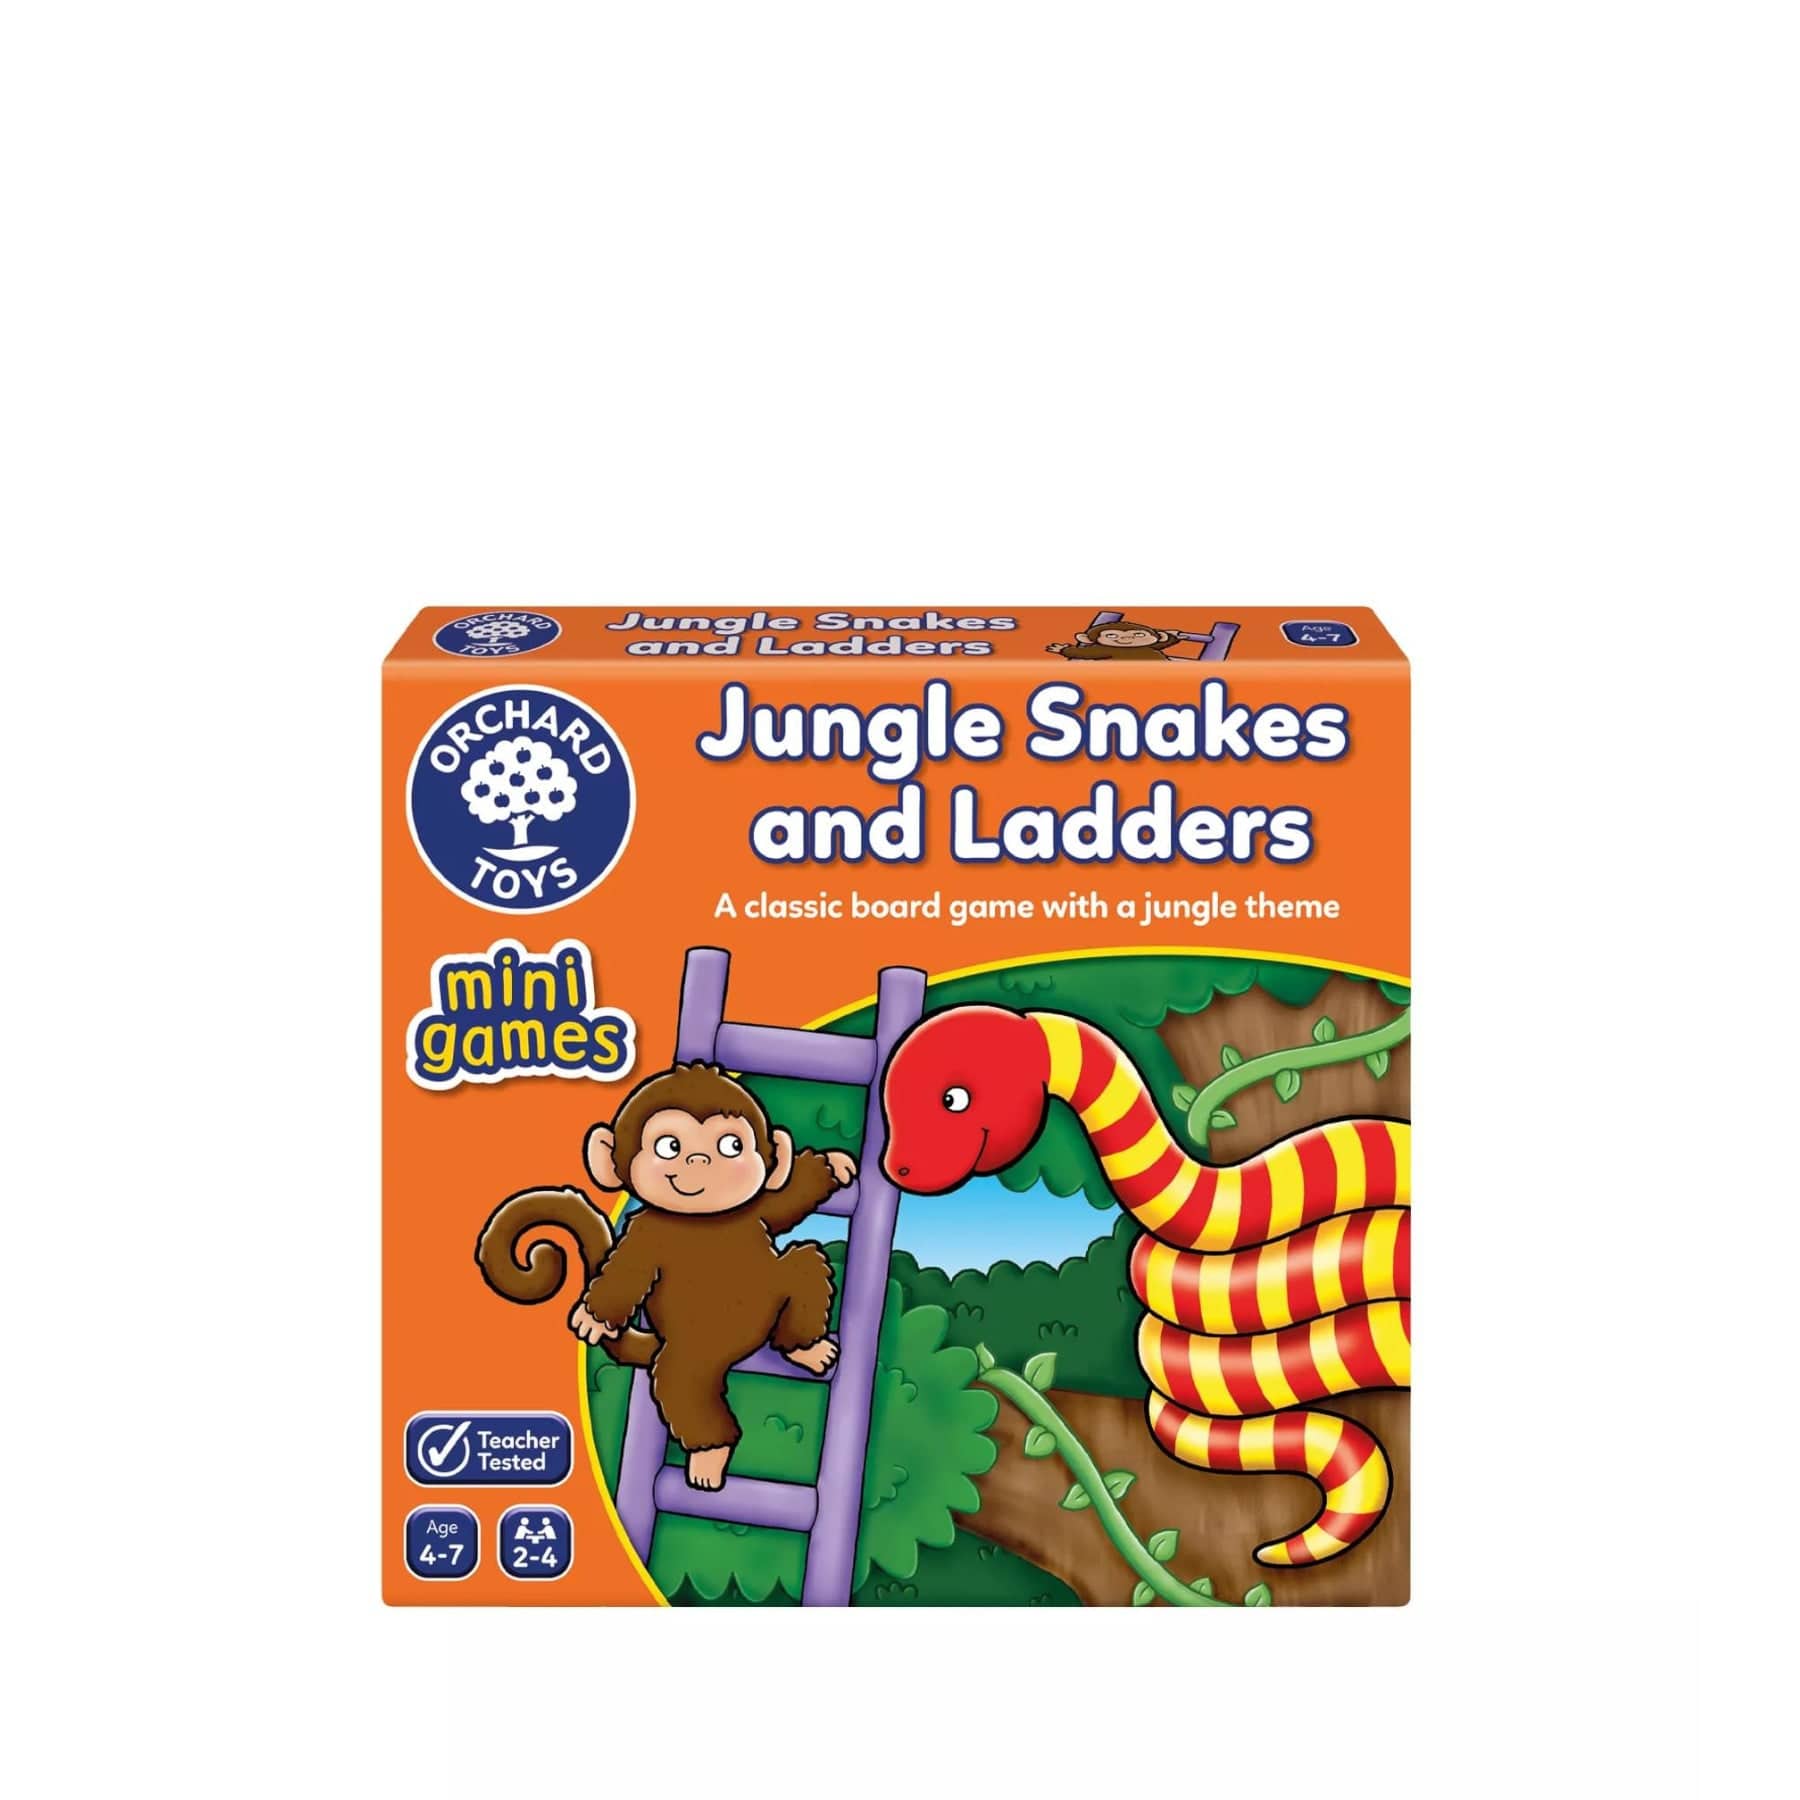 Jungle snakes & ladders mini game